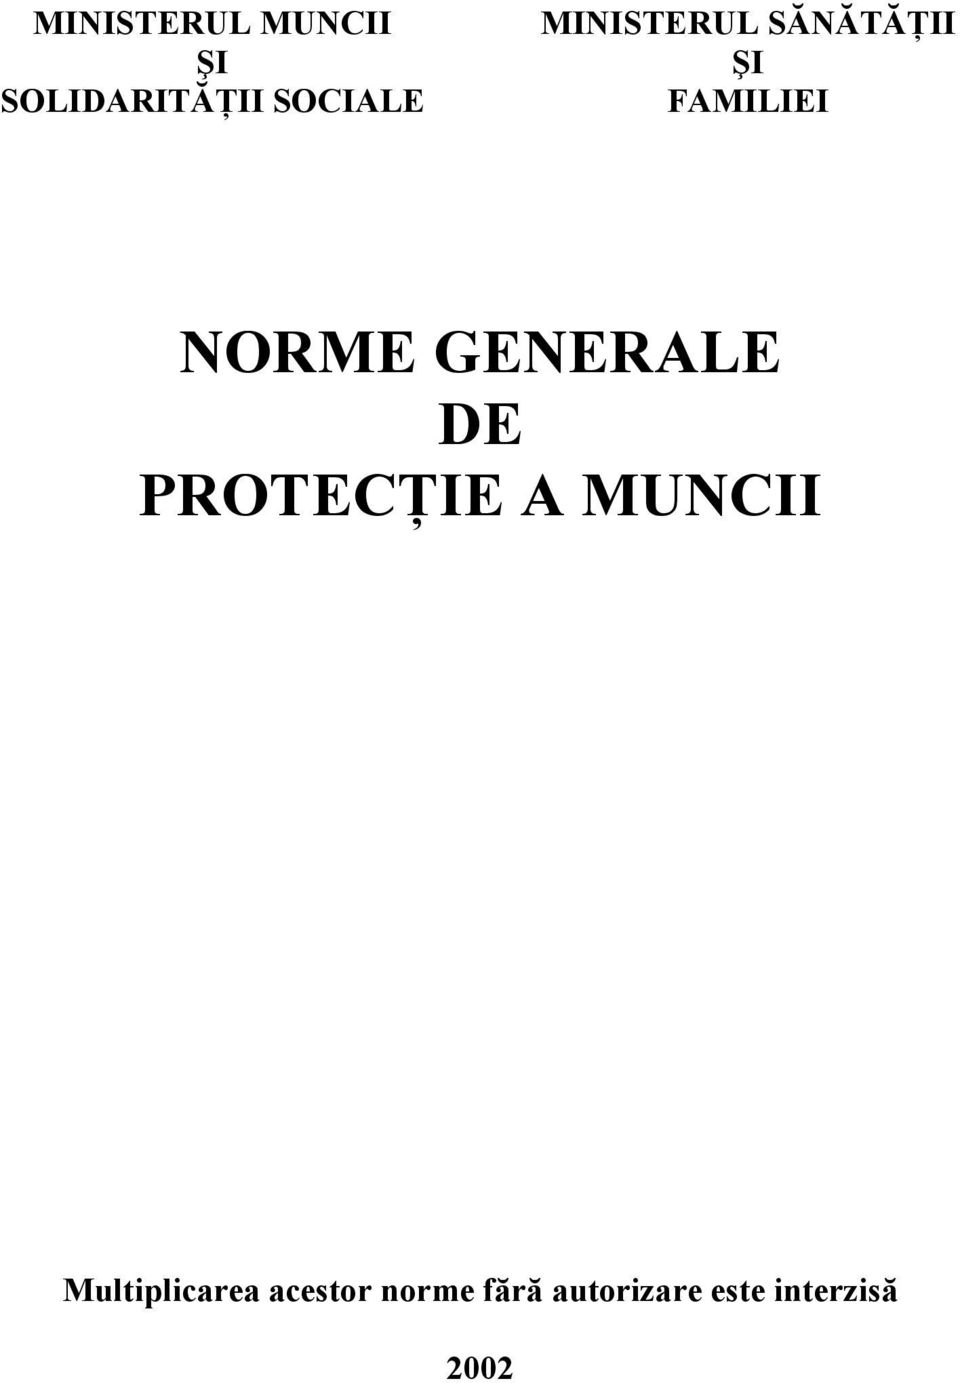 GENERALE DE PROTECŢIE A MUNCII